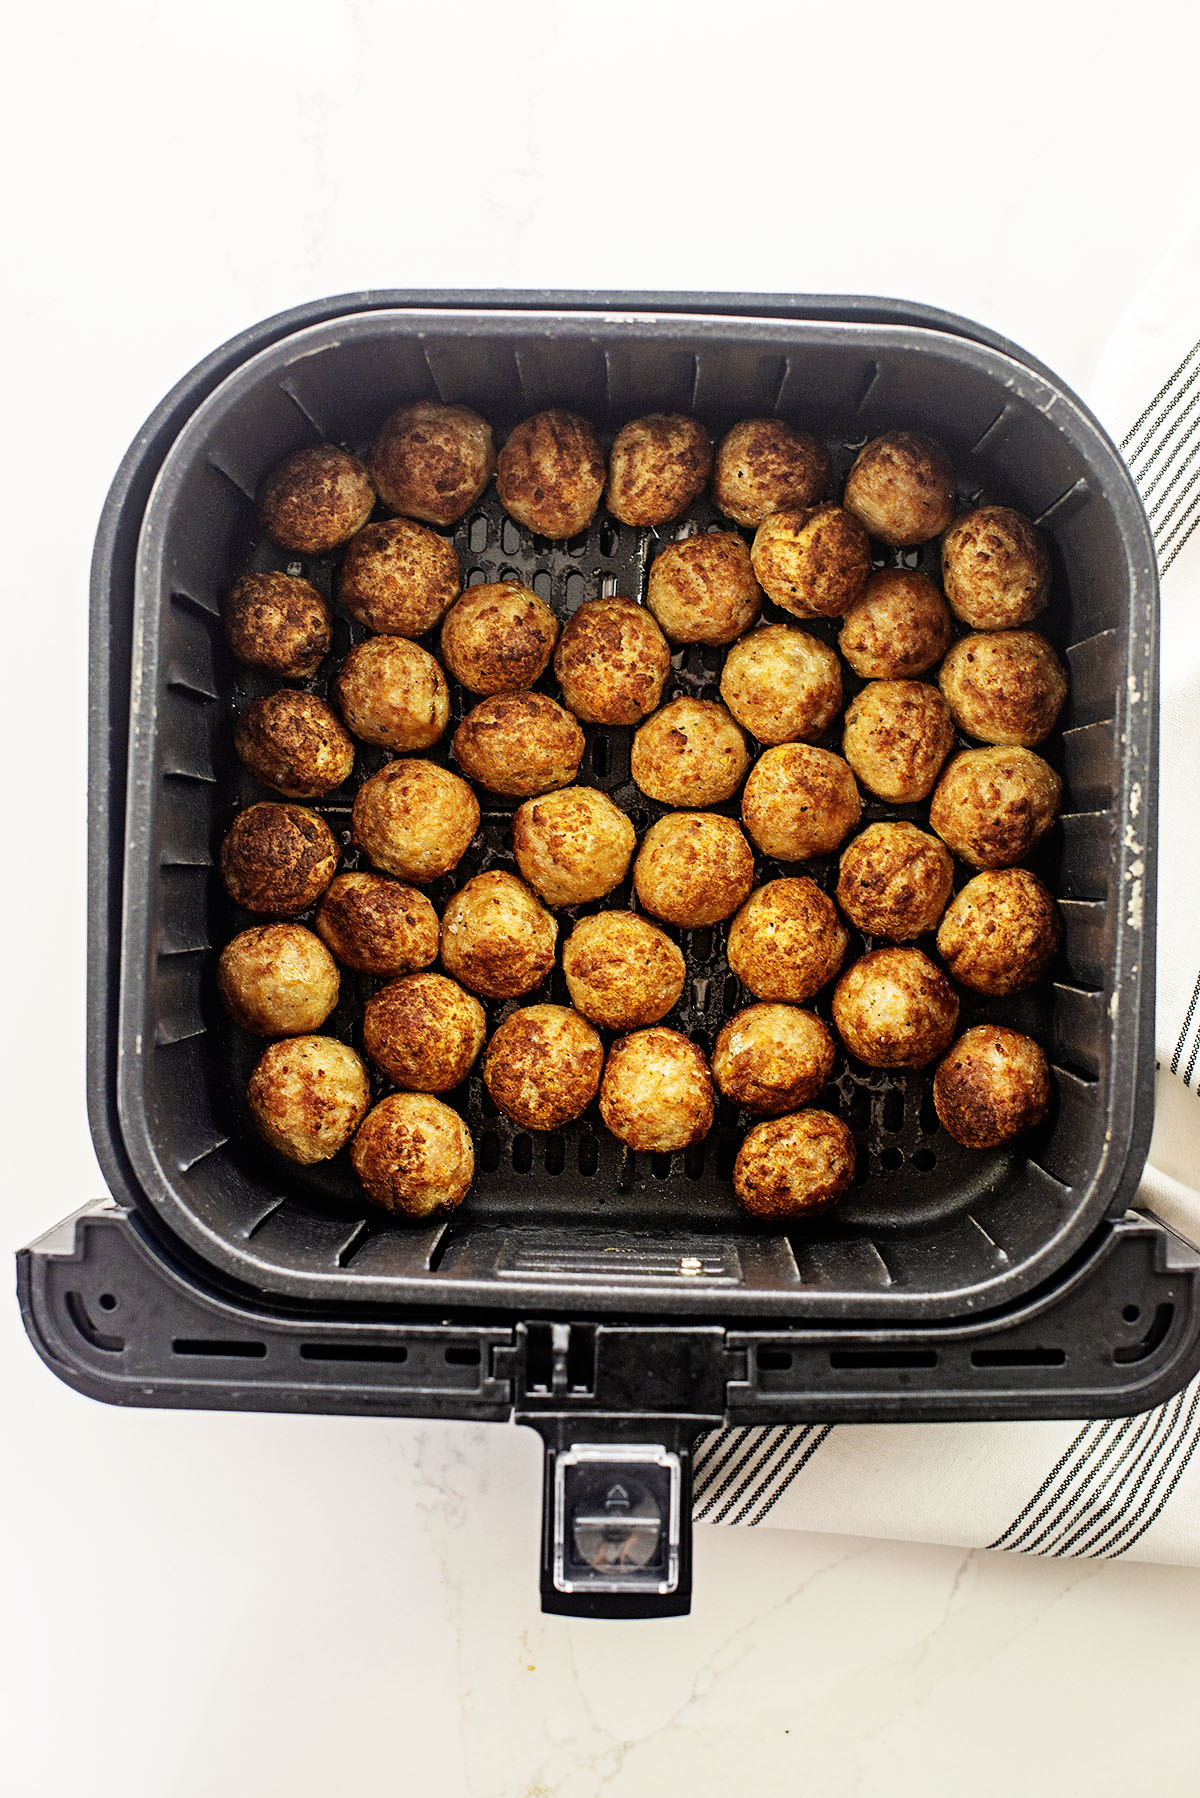 frozen meatballs in air fryer basket.